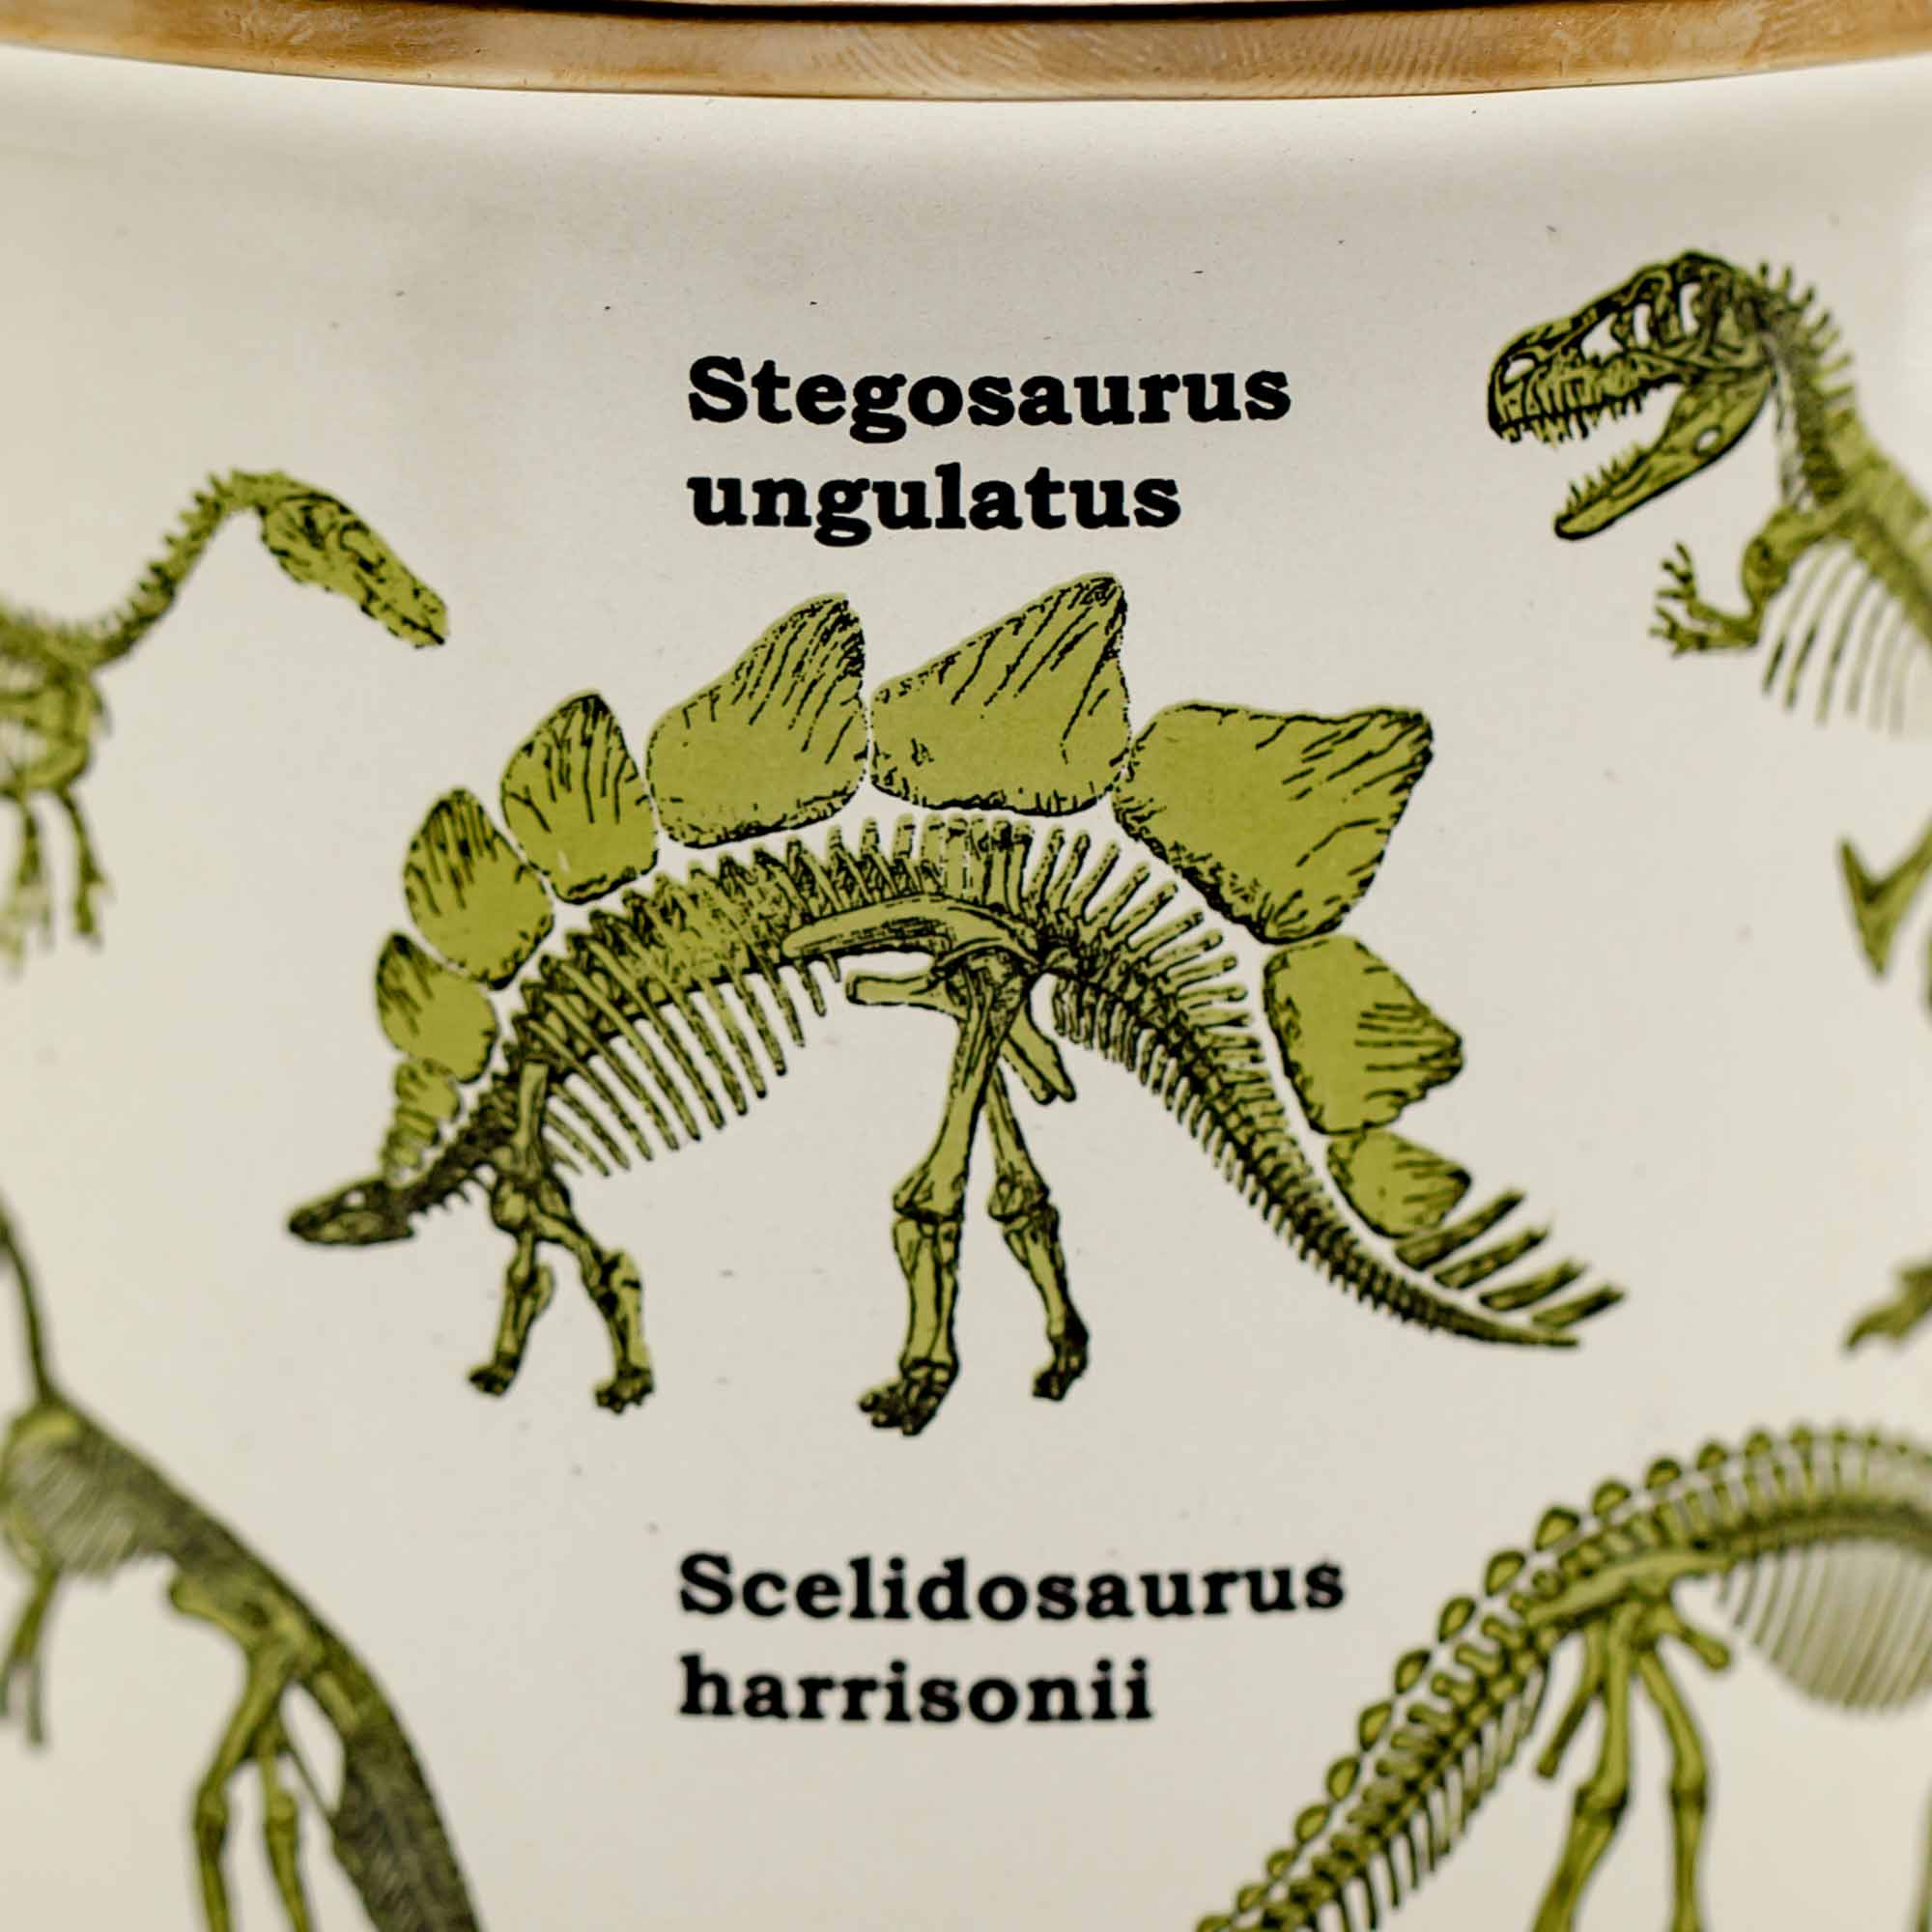 ECOLOGIE - Dinosaurum Enamel Mug - Mortise And Tenon